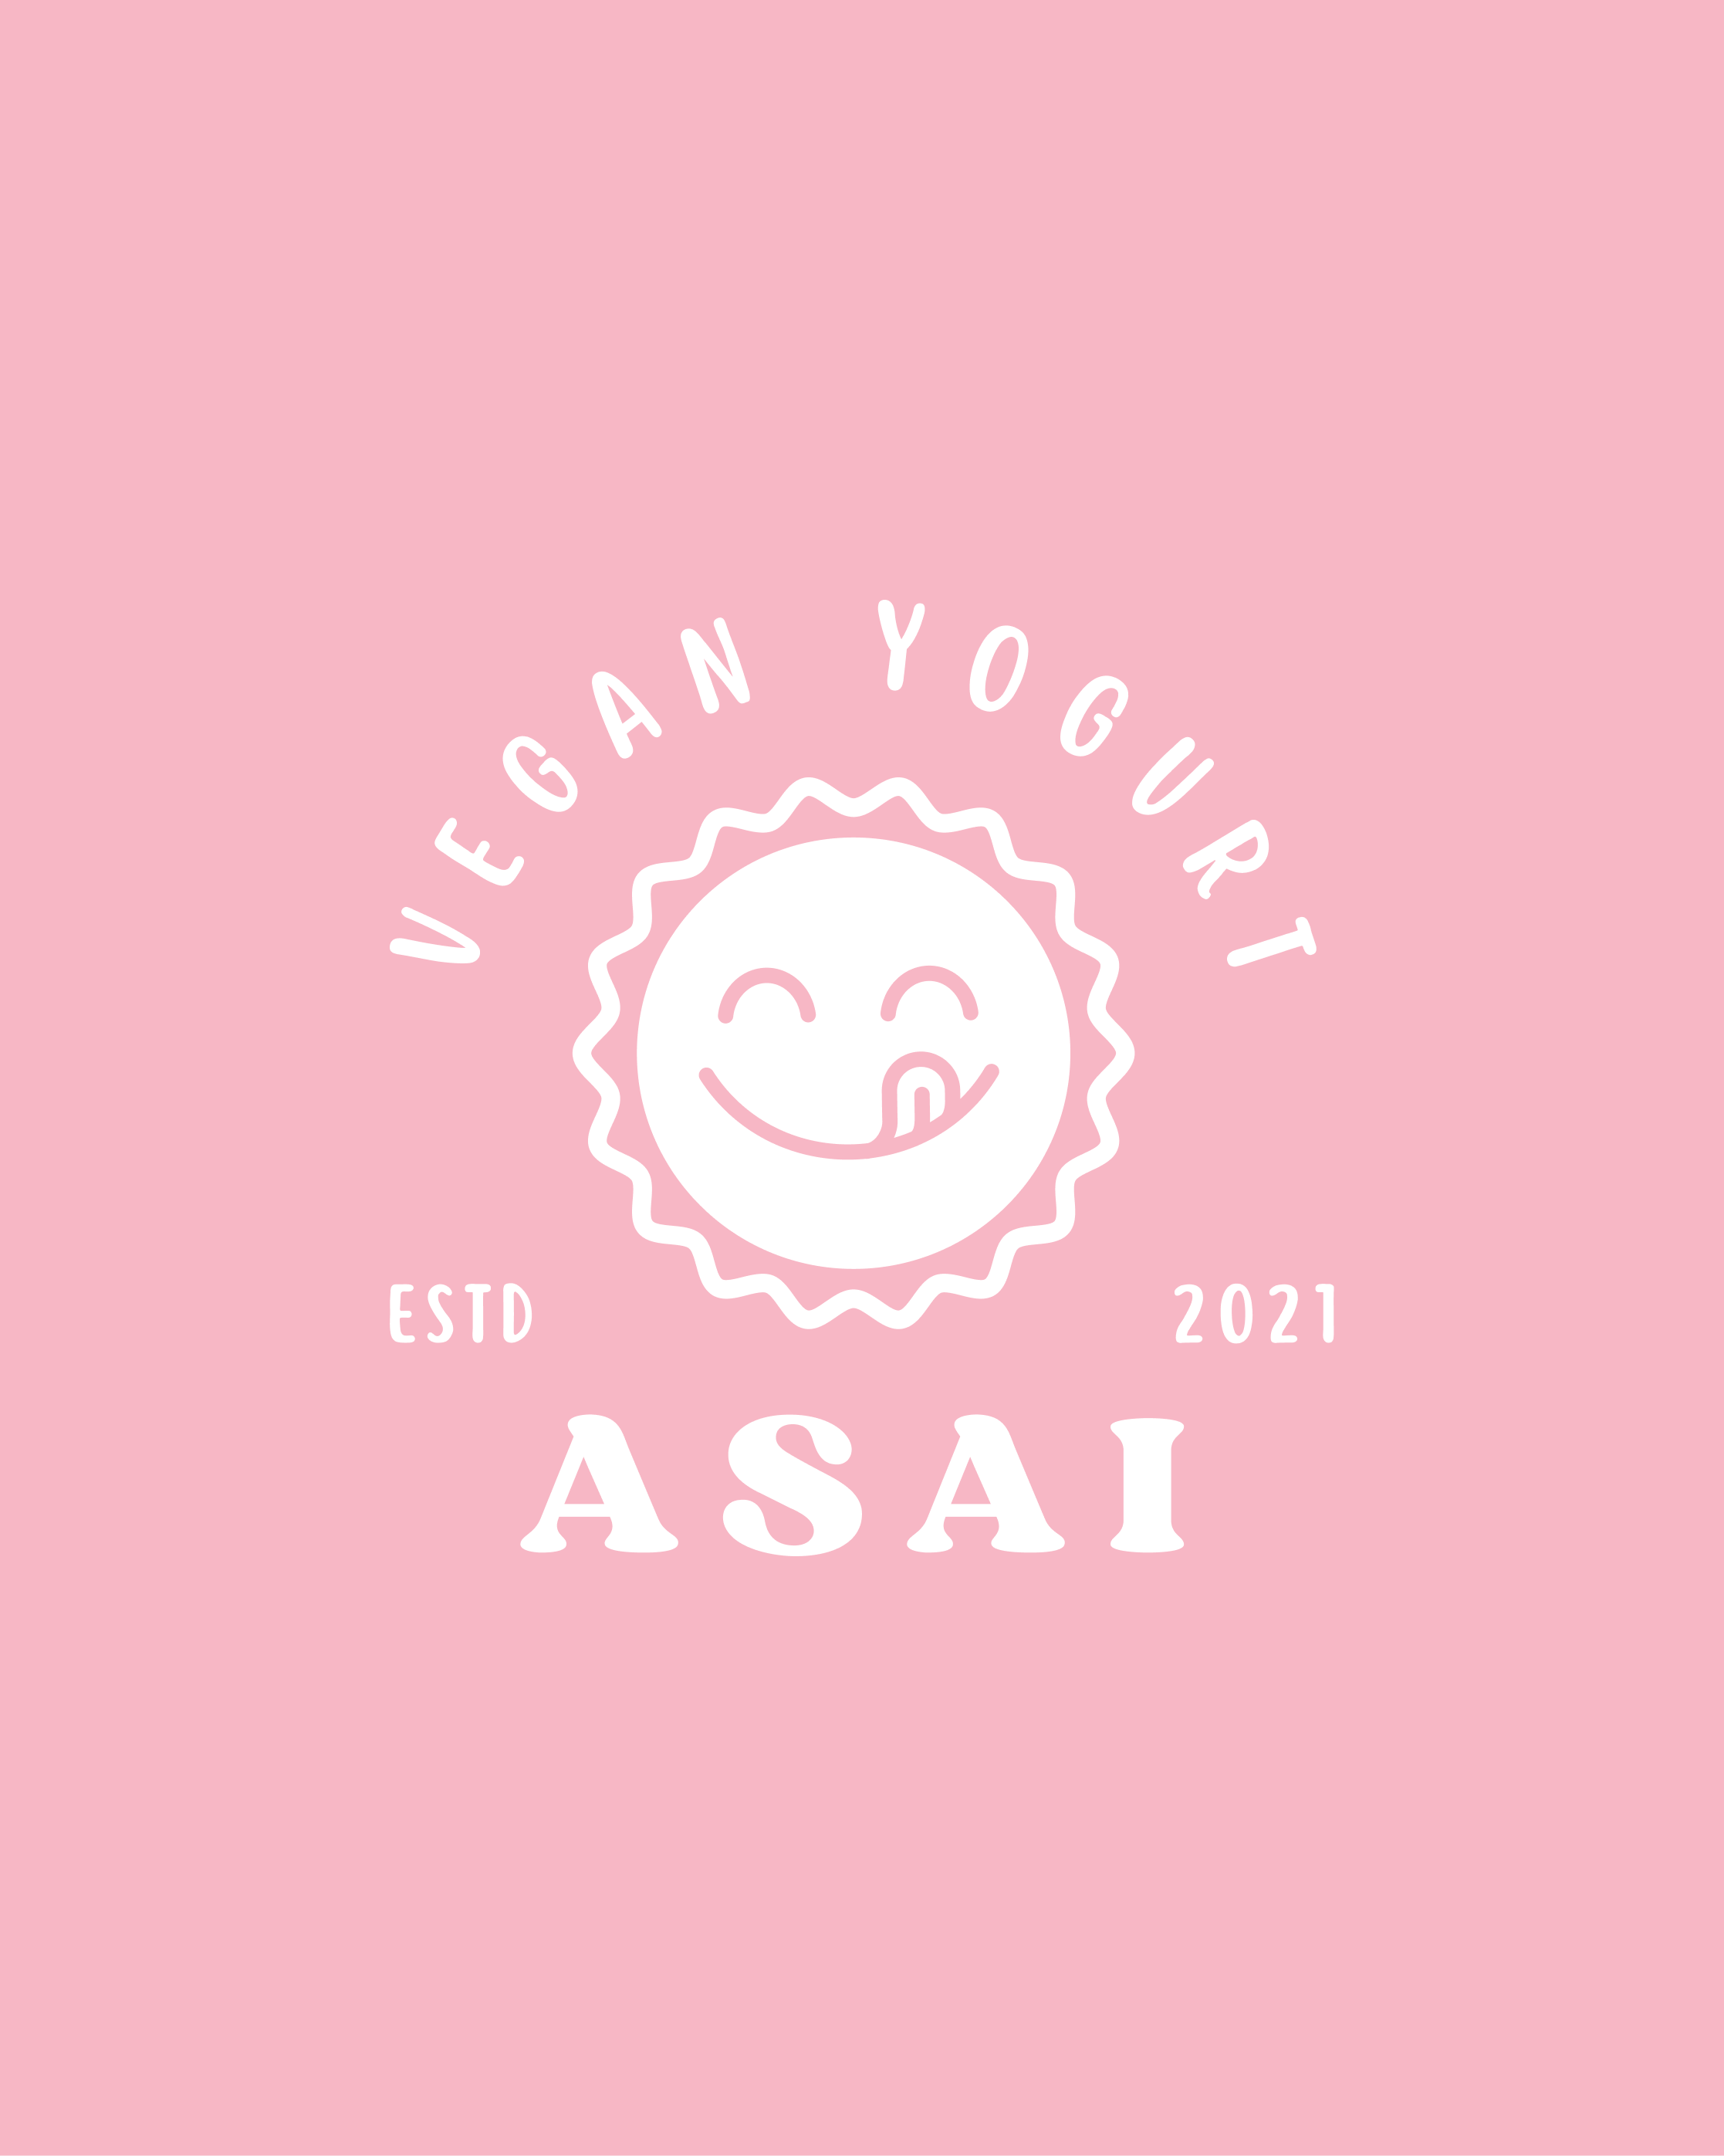 yaourt vegan logo fond rose